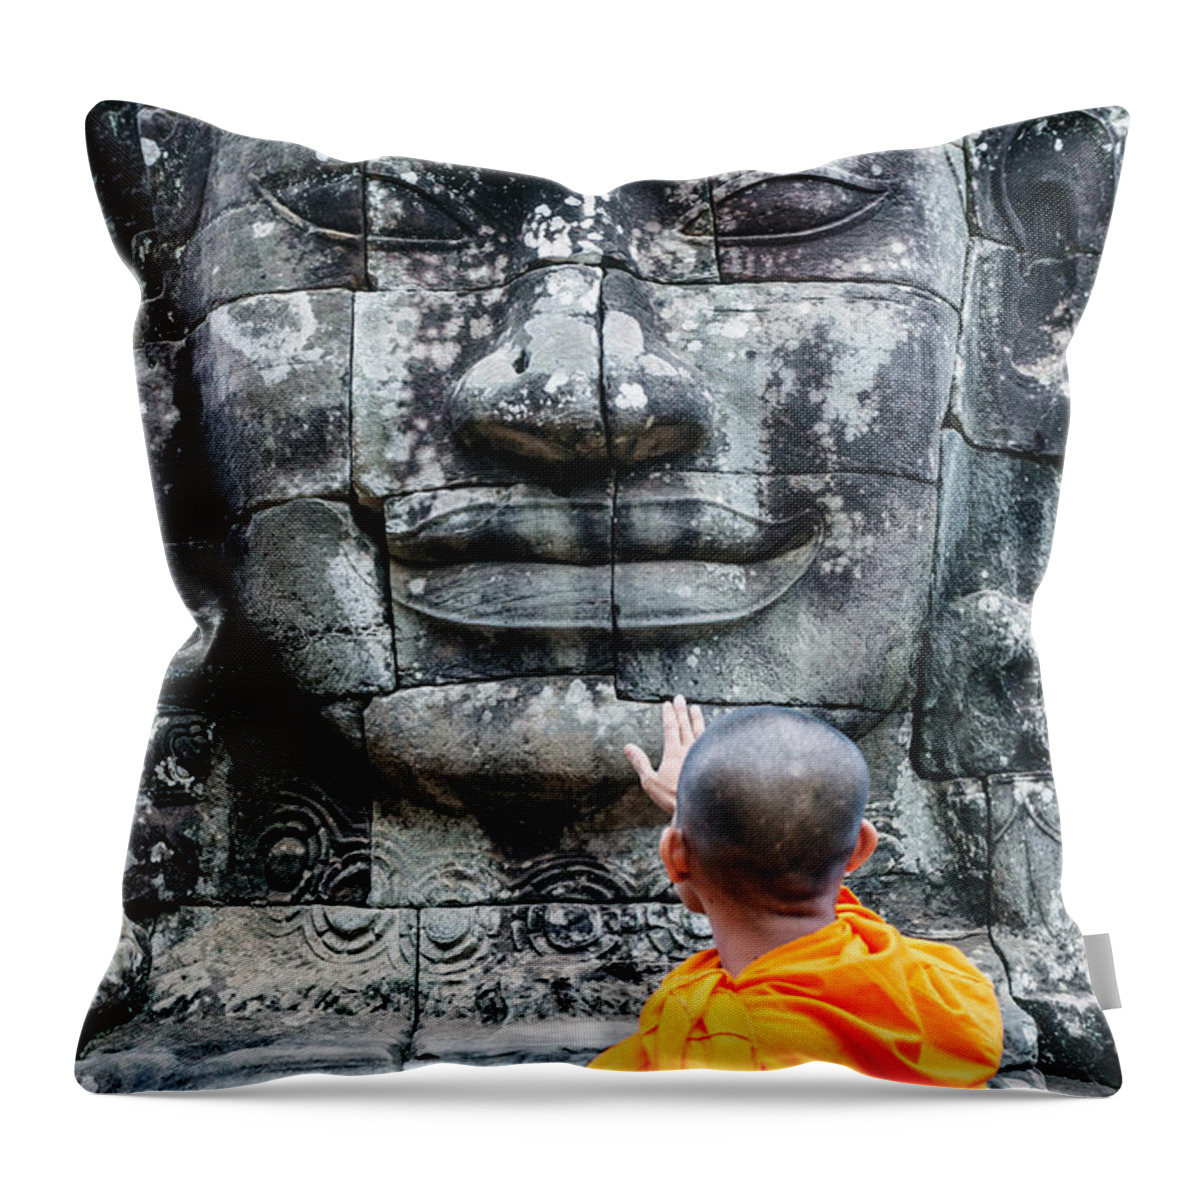 Buddha Throw Pillow featuring the photograph Cambodia - Angkor Wat - Monk touching giant Buddha statue by Matteo Colombo